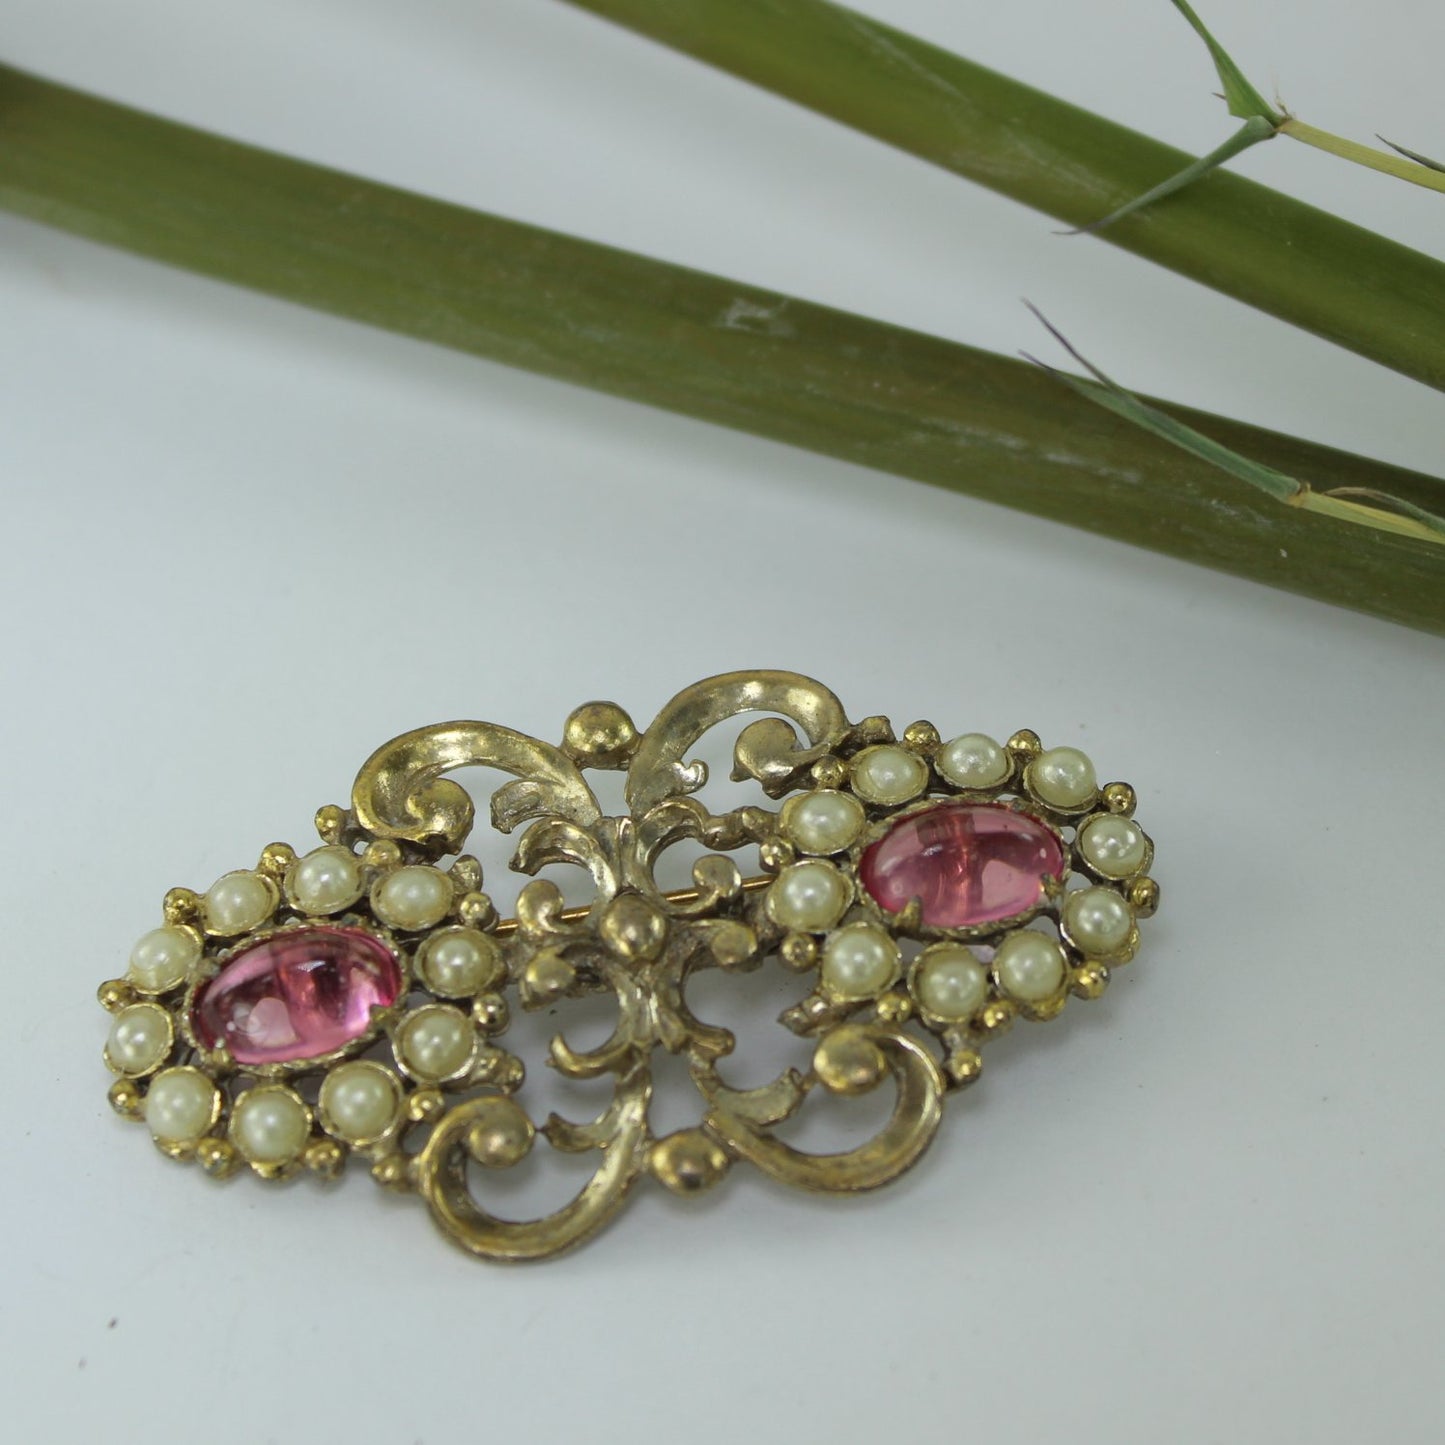 Paul Sargent Pin Brooch 24 KP Pearls Pink Ovals Fleur de Lis nice condition vintage brooch